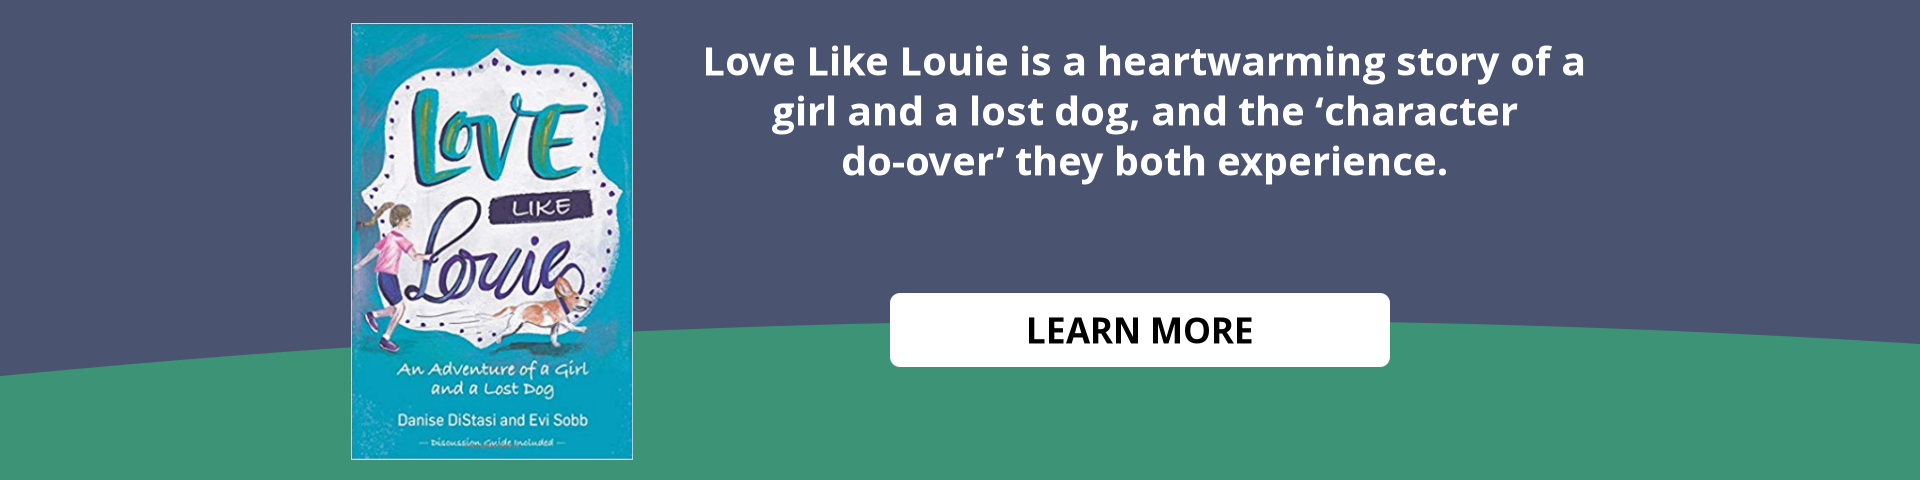 Love Like Louie by Danise DiStasi